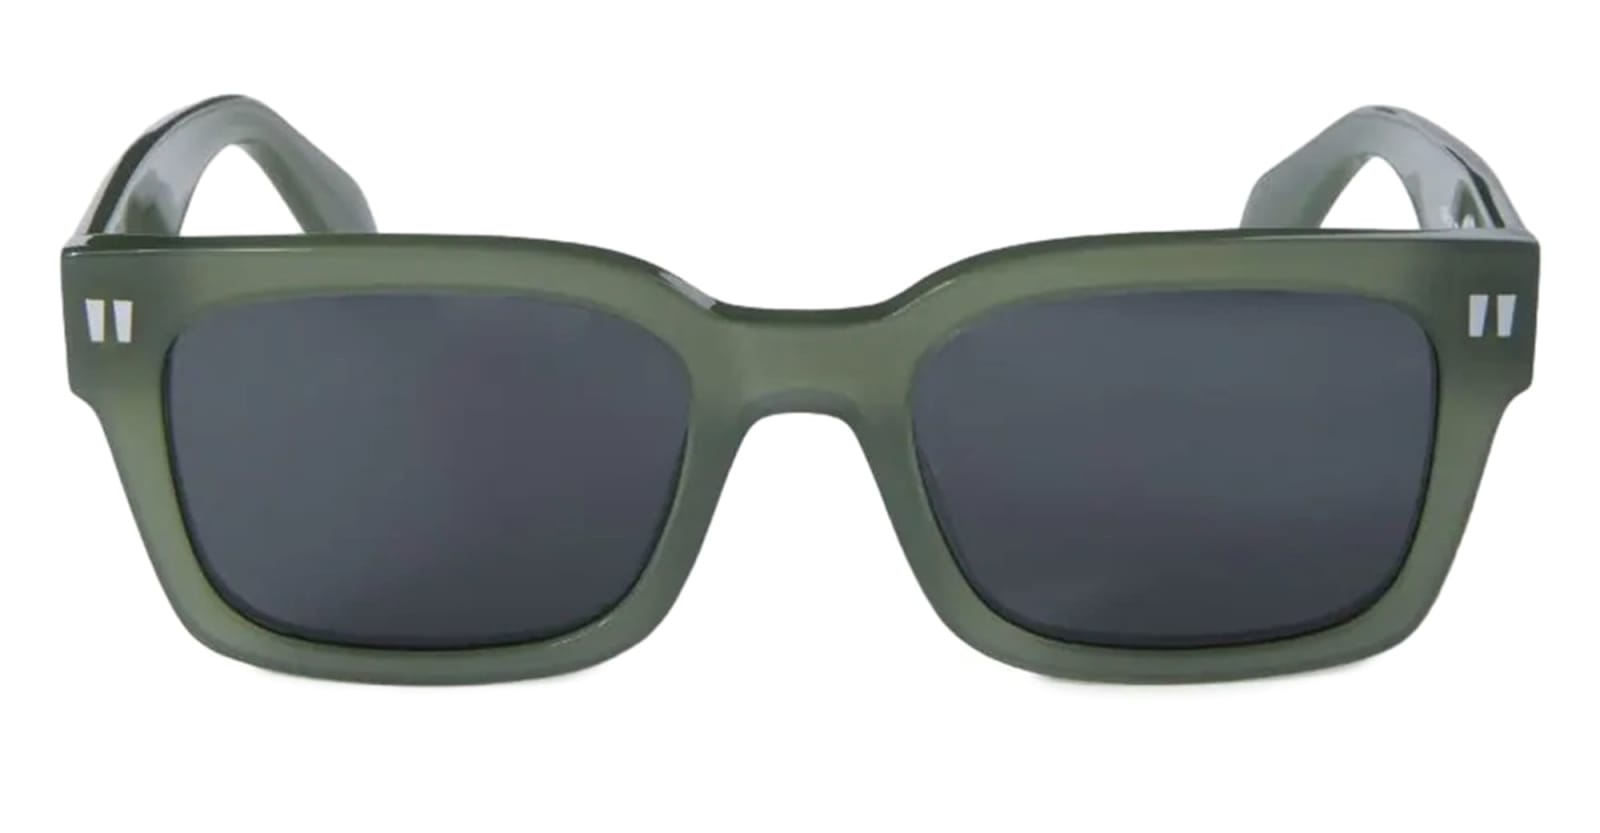 Midland - Olive Green / Dark Grey Sunglasses